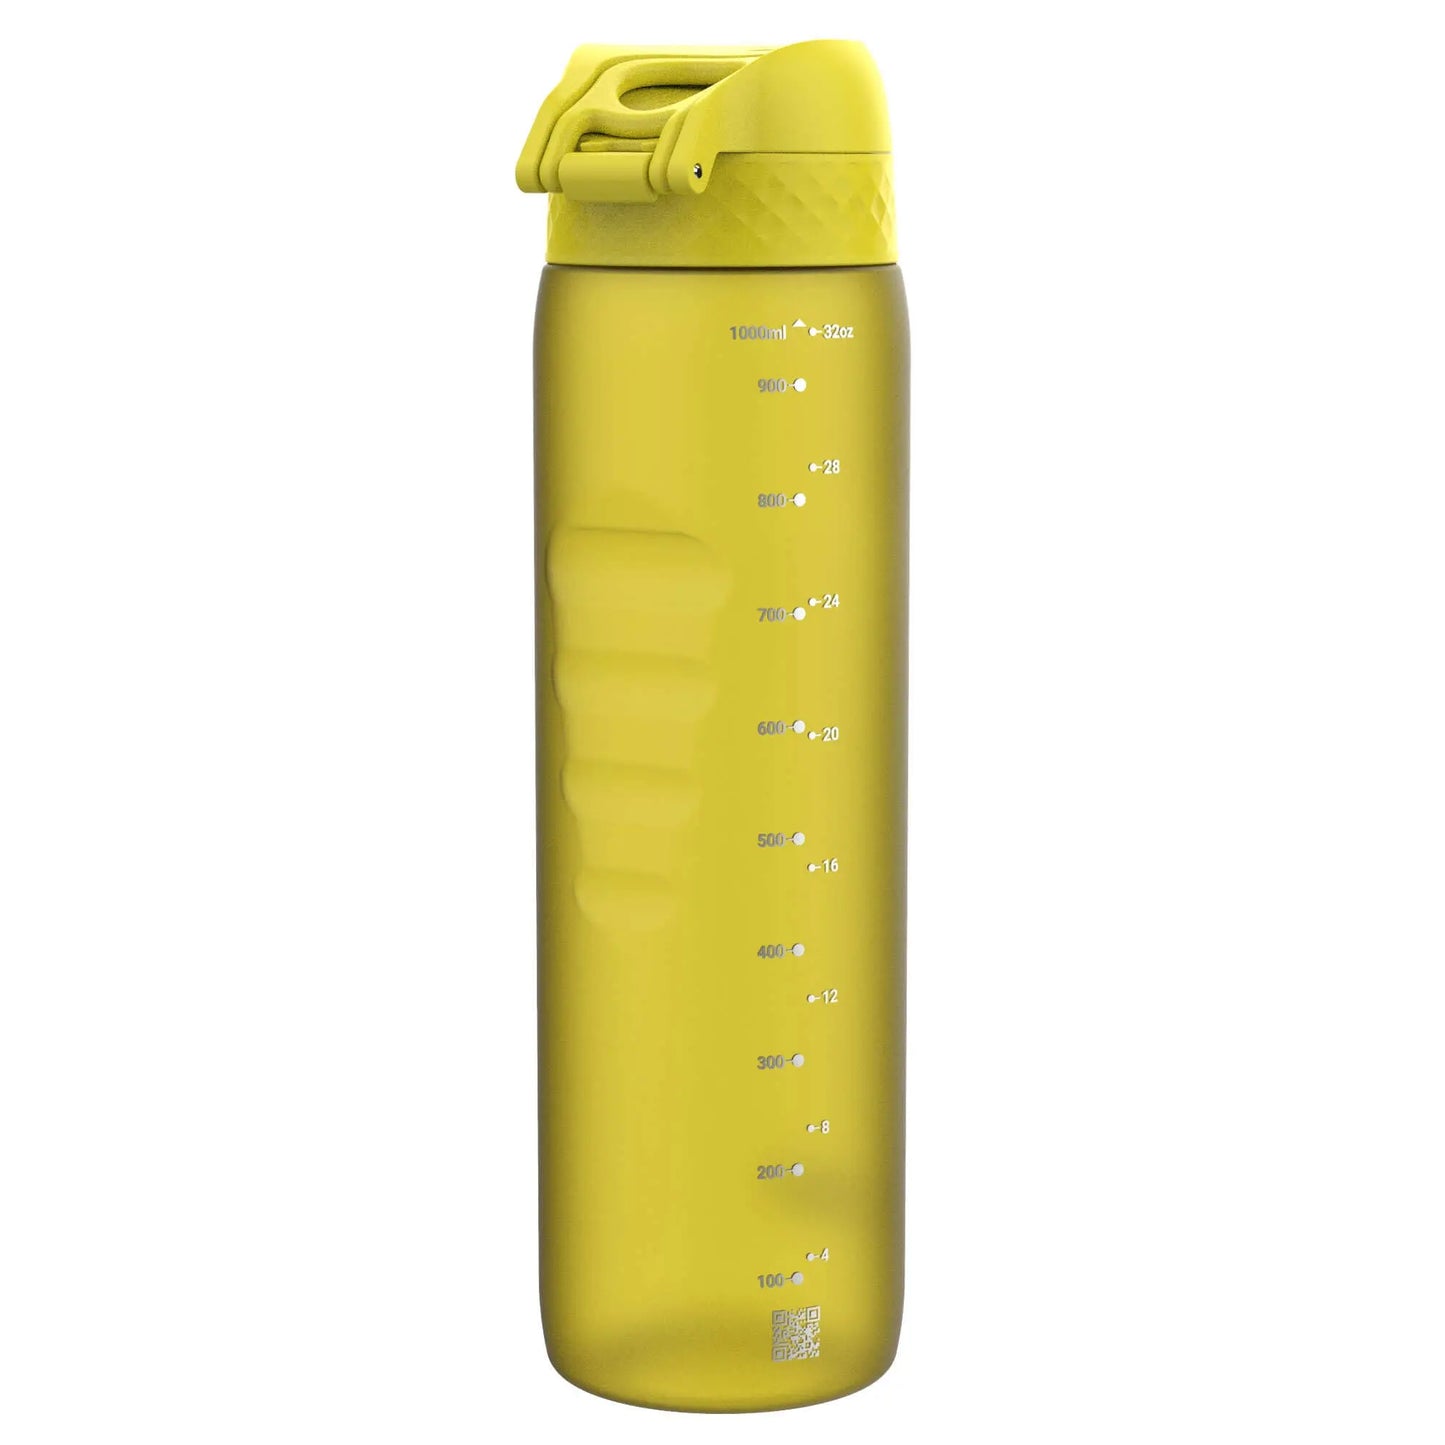 Leak Proof 1 litre Water Bottle, Recyclon™, Yellow, 1L Ion8